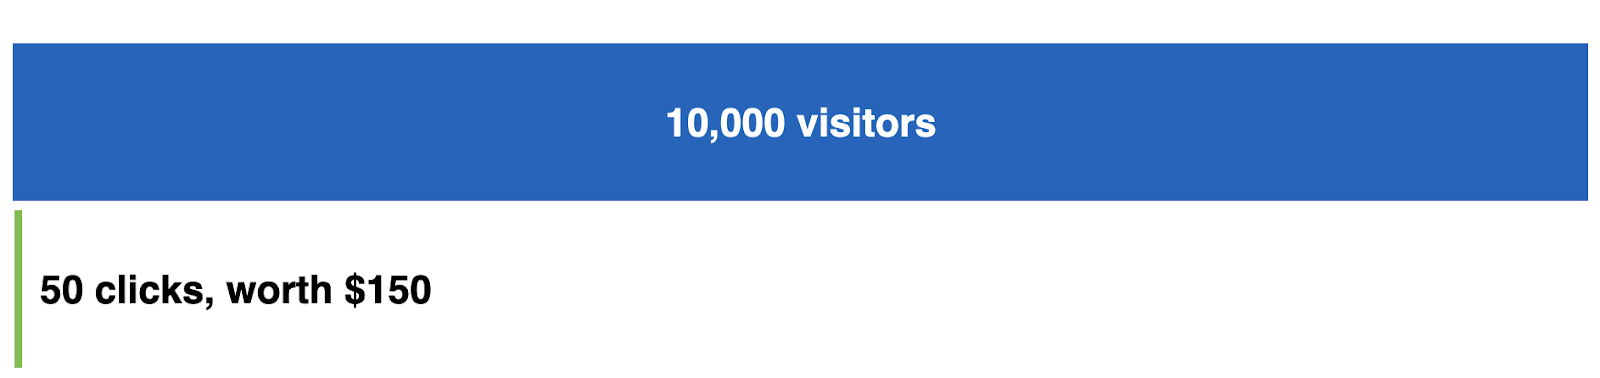 10,000 visitors - 50 clicks, worth $150